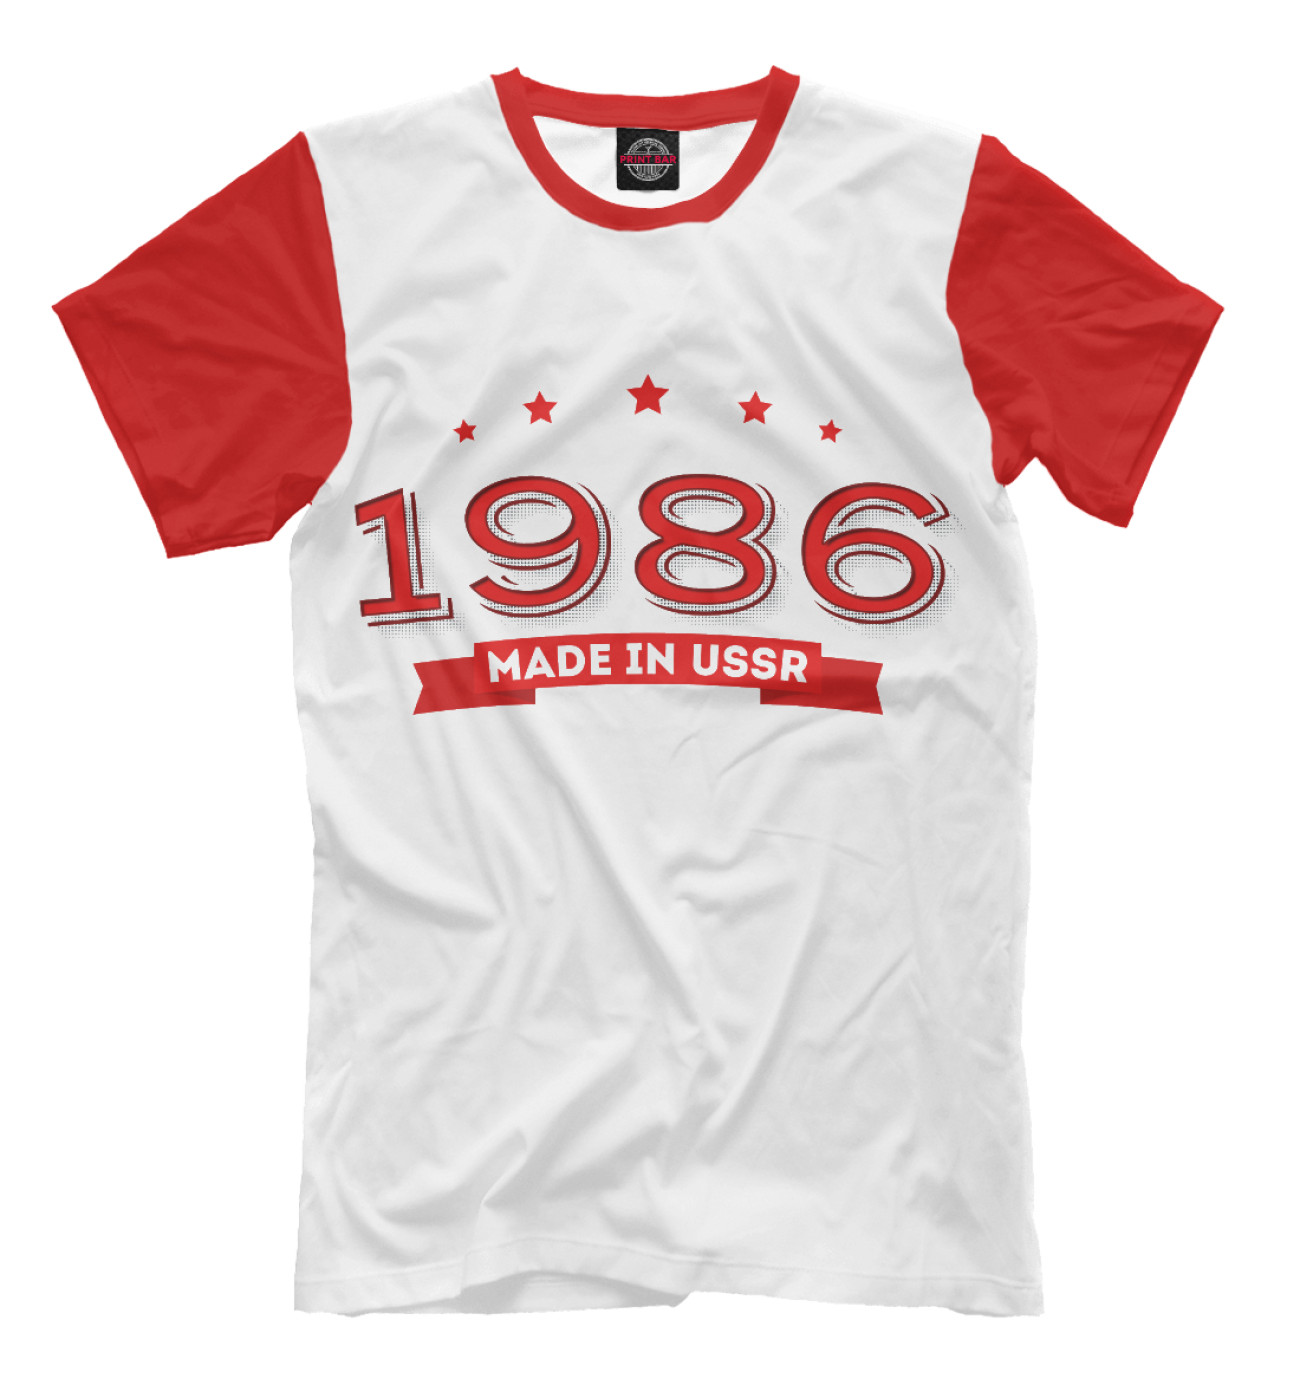 Мужская Футболка Made in 1986 USSR, артикул: DVS-456135-fut-2